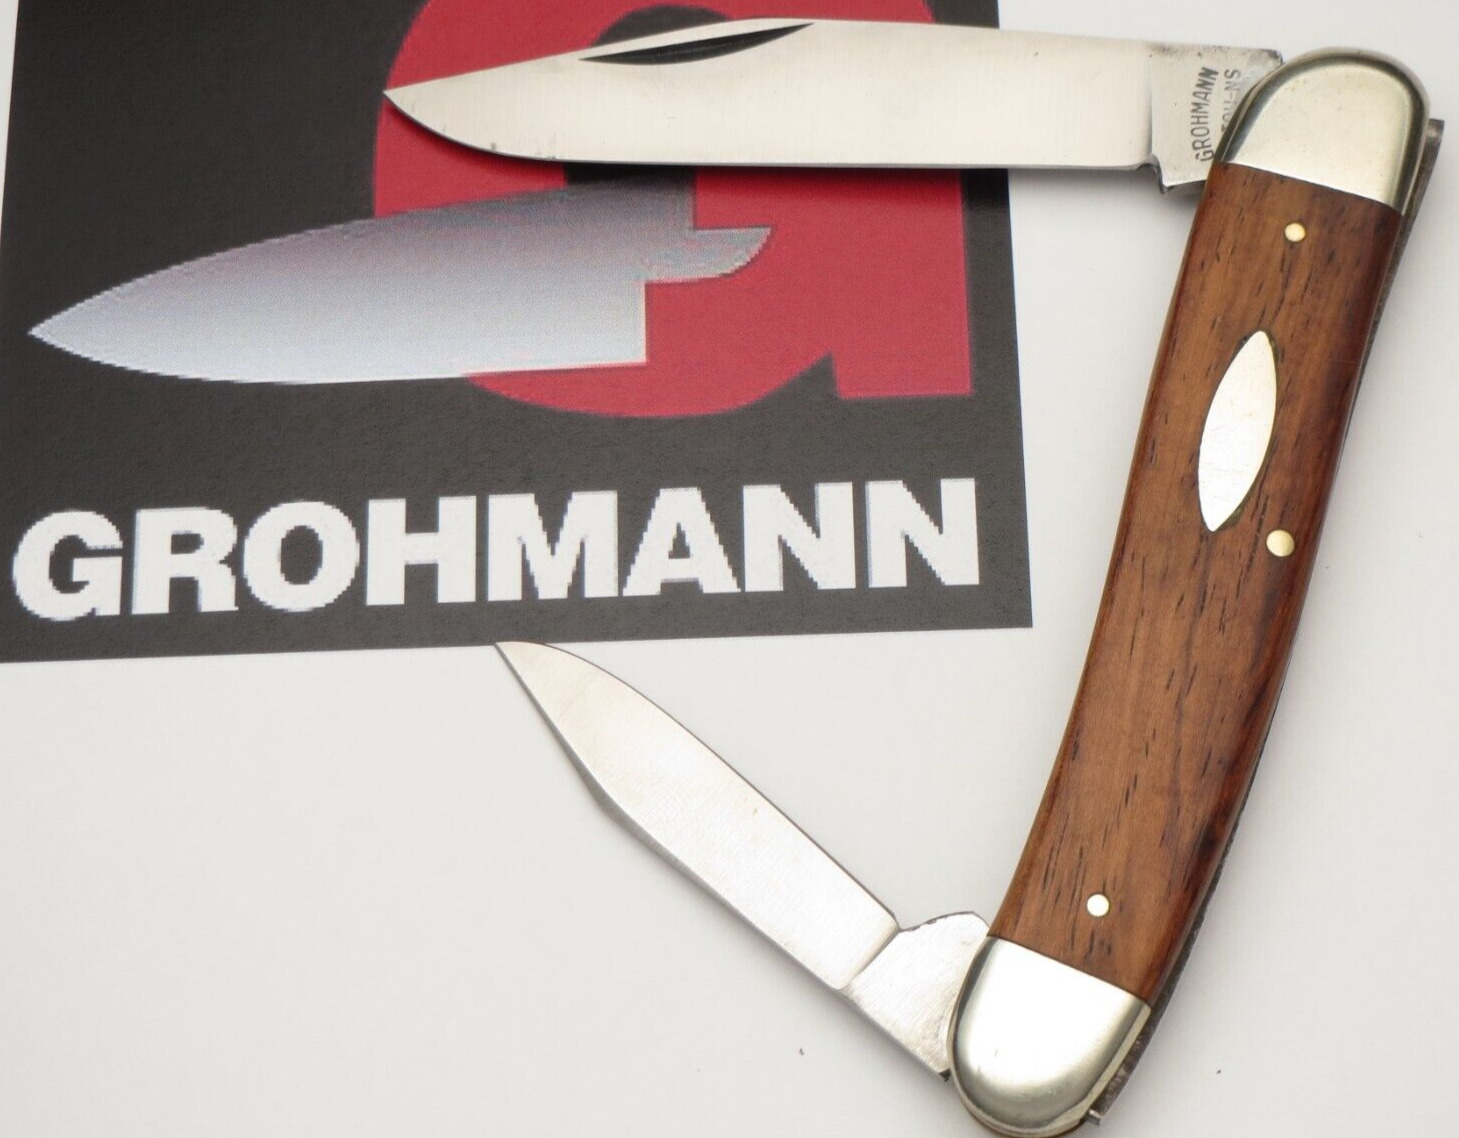 GROHMANN PICTOU NOVA SCOTIA Serpentine Dogleg Knife - Two Blades - Wood Handles